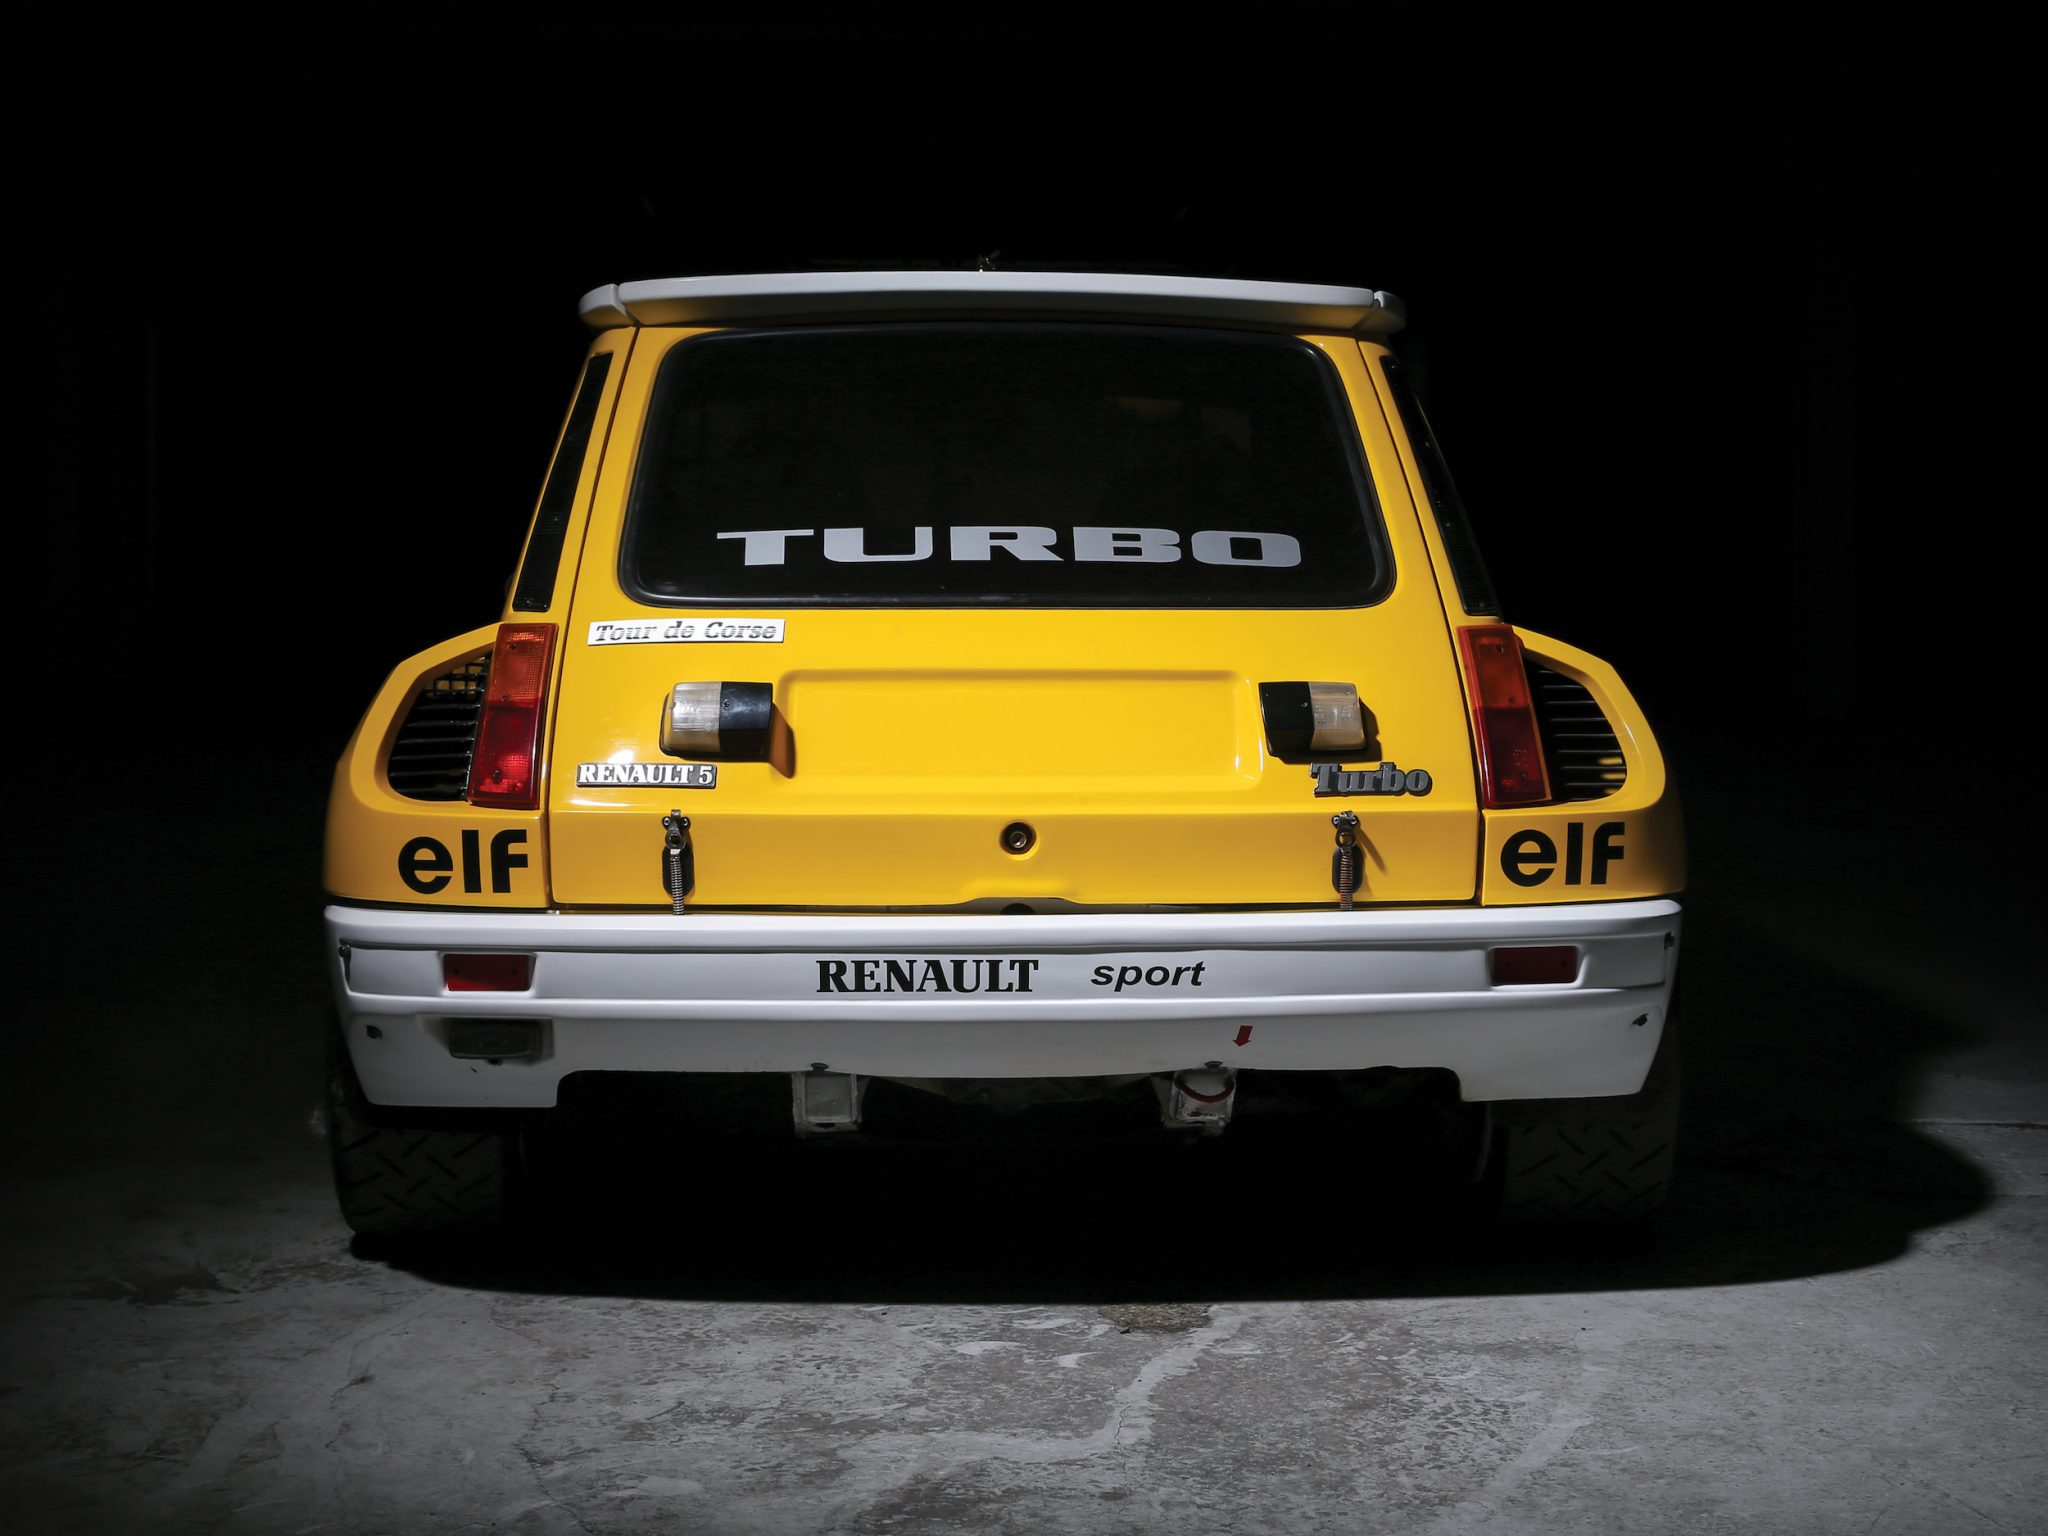 Renault 5 Wallpapers